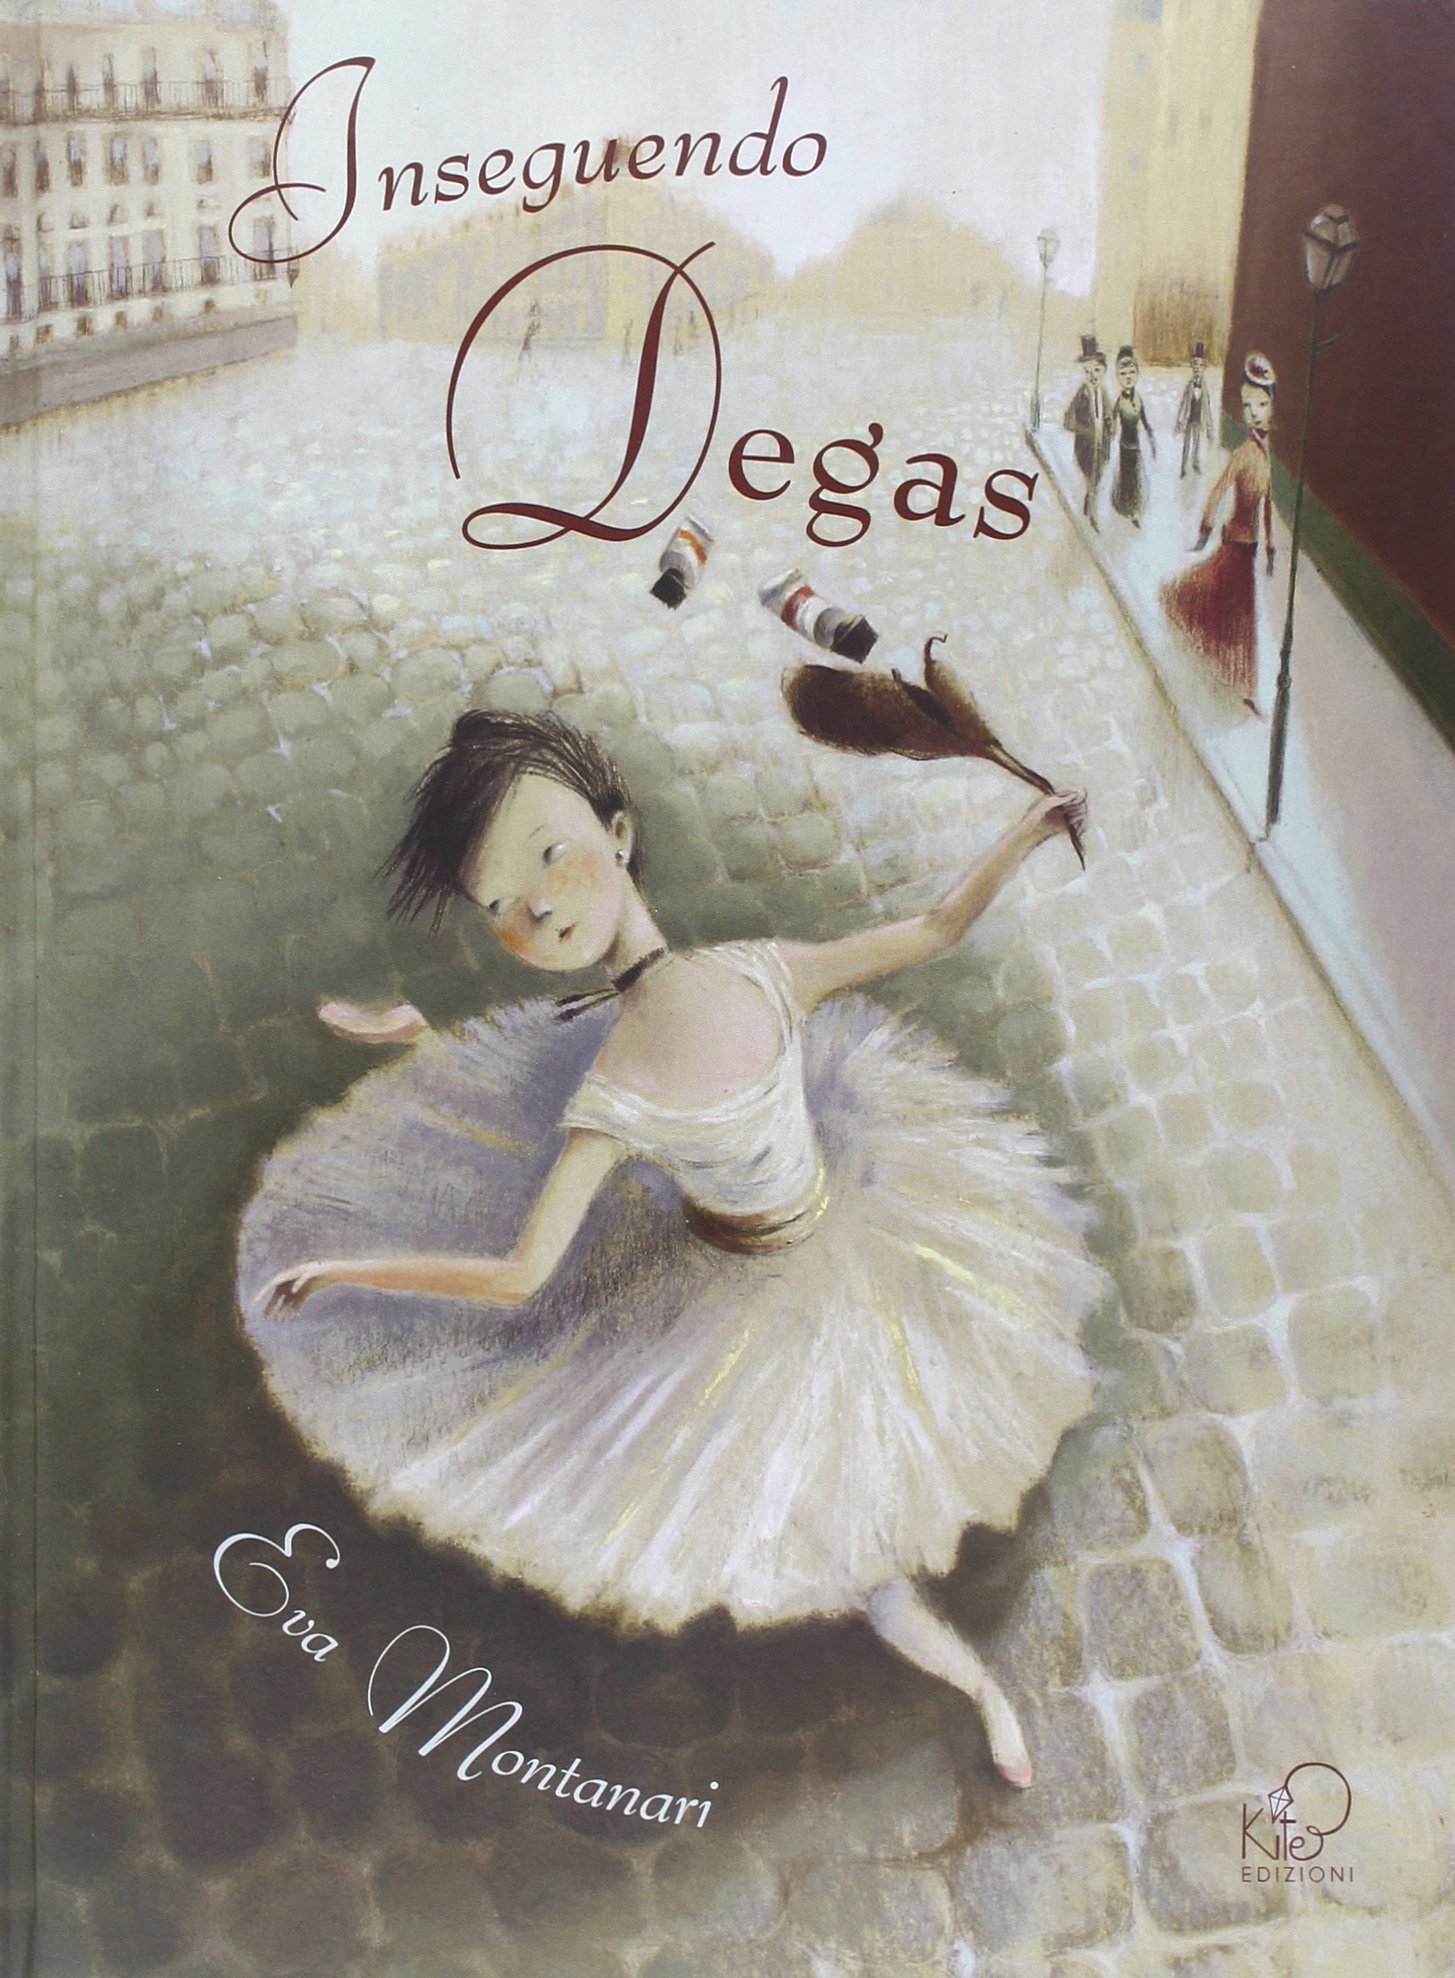 Inseguendo Degas